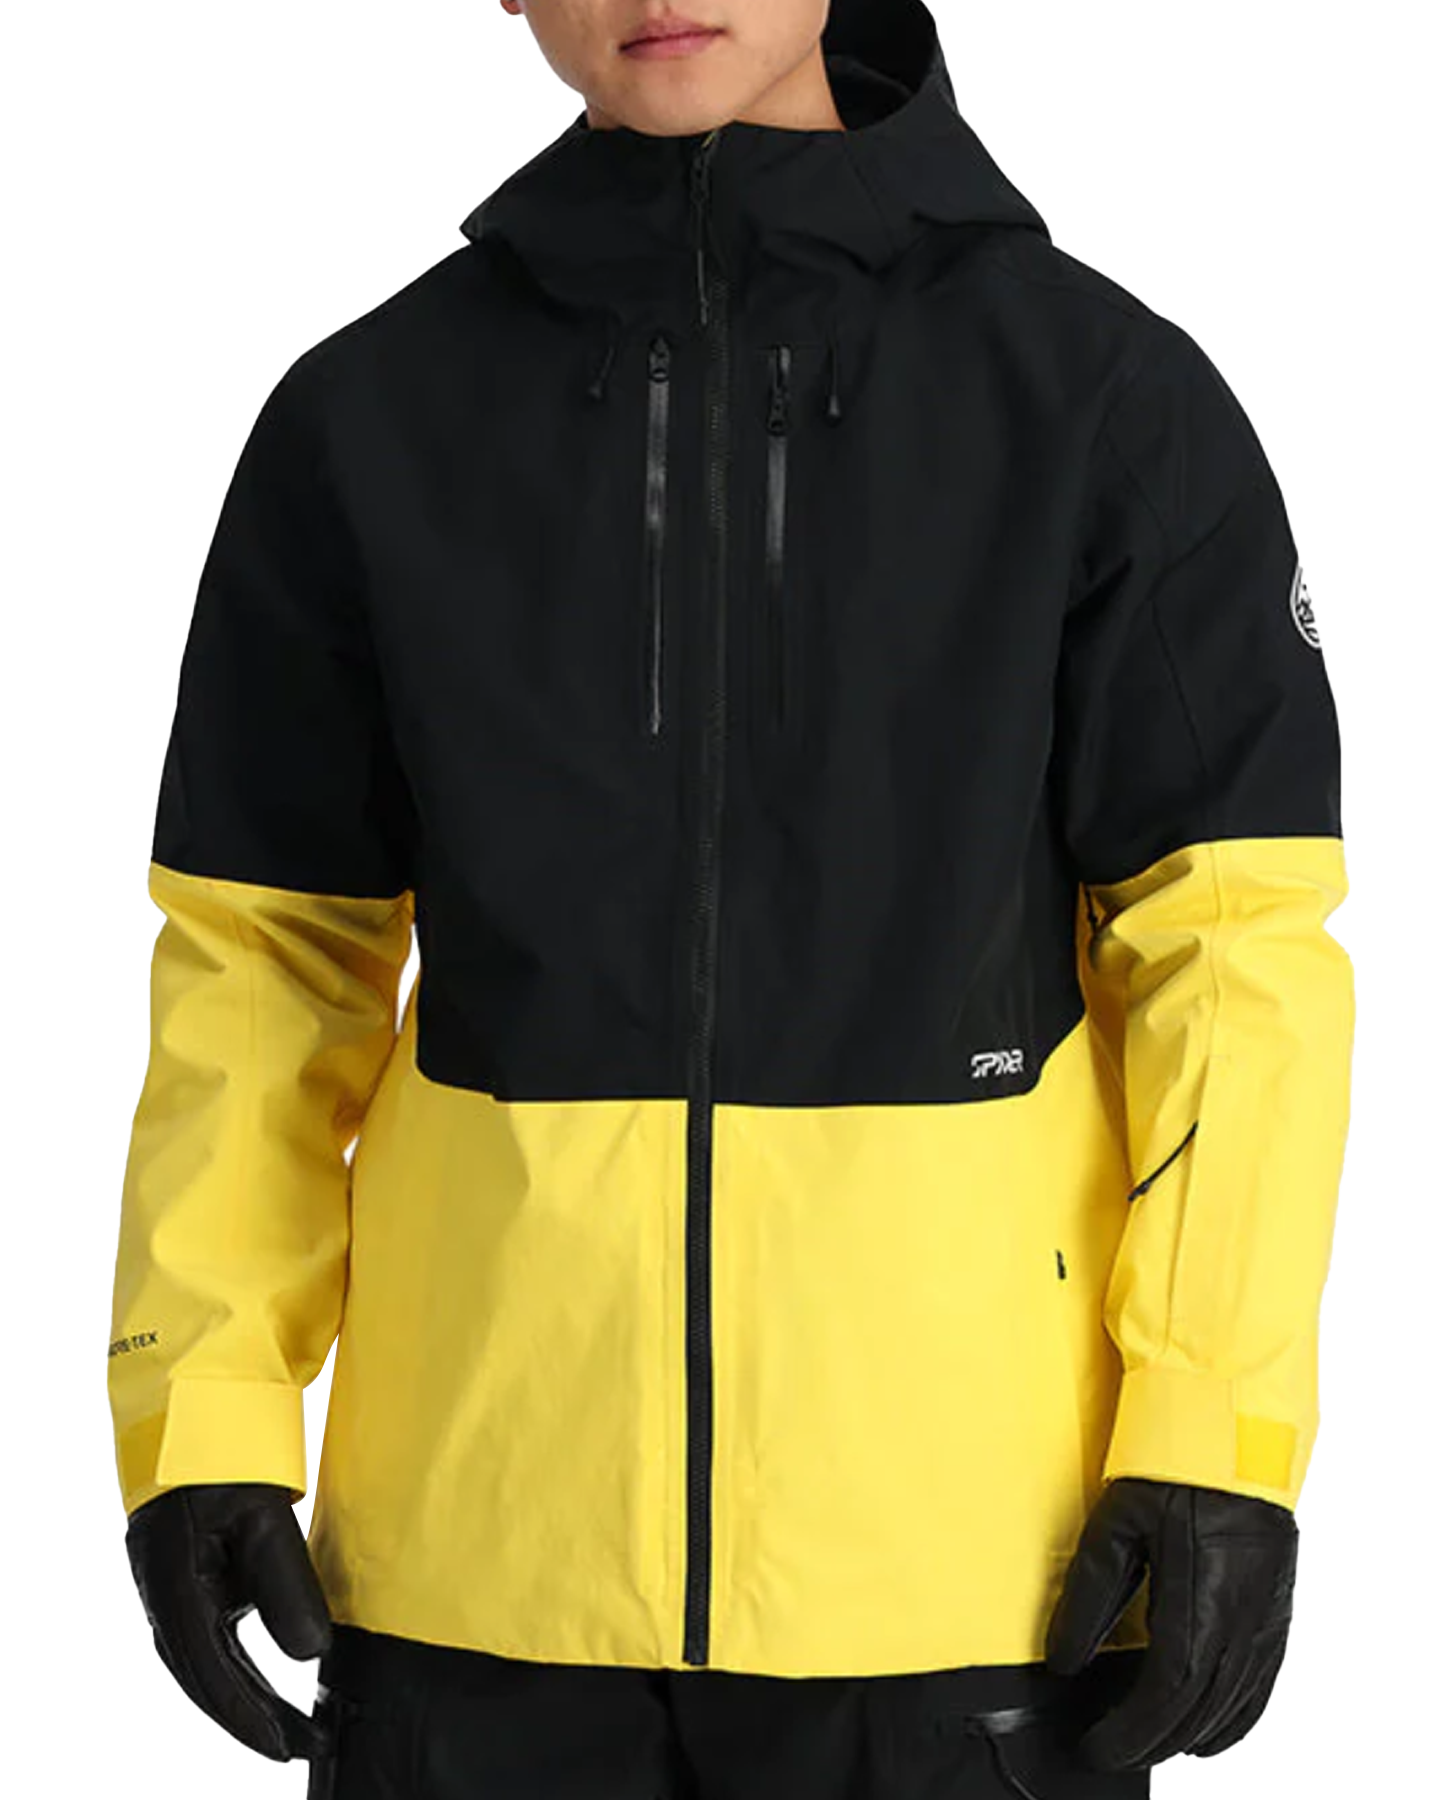 Spyder Jagged Gtx Shell Jacket - Yellow Men's Snow Jackets - SnowSkiersWarehouse